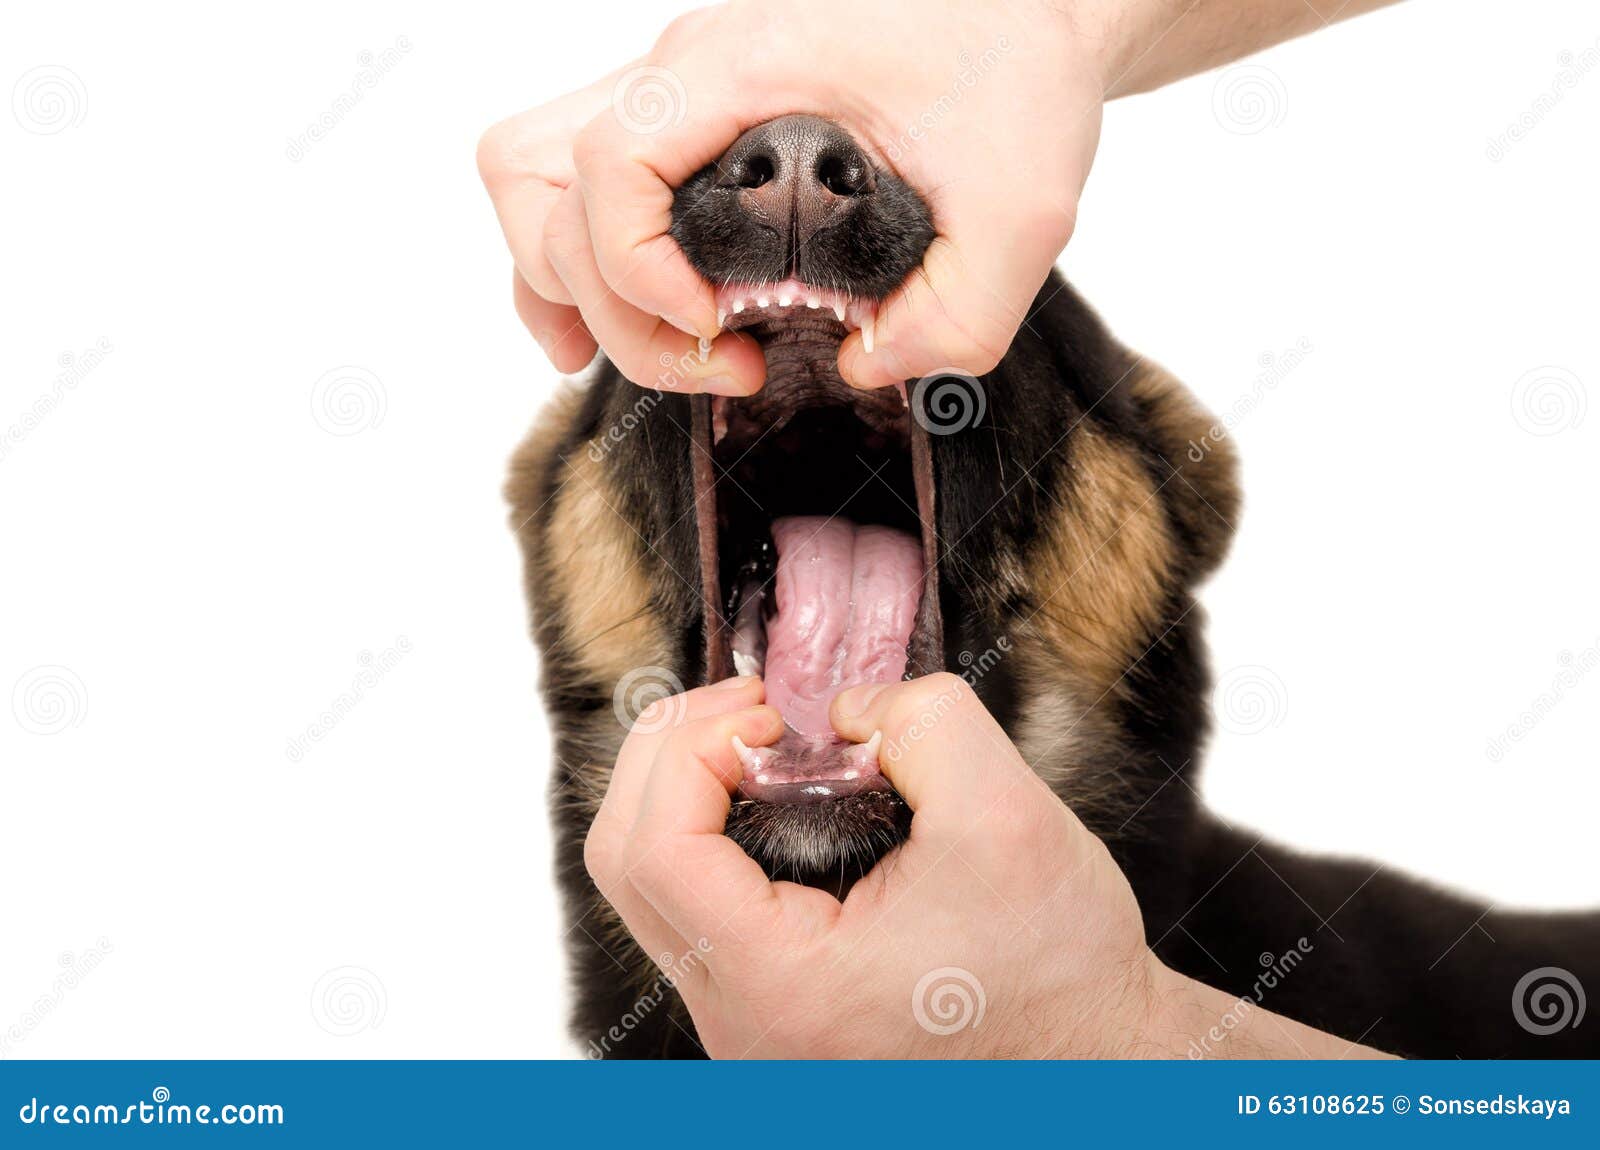 the veterinarian checks the dog's teeth